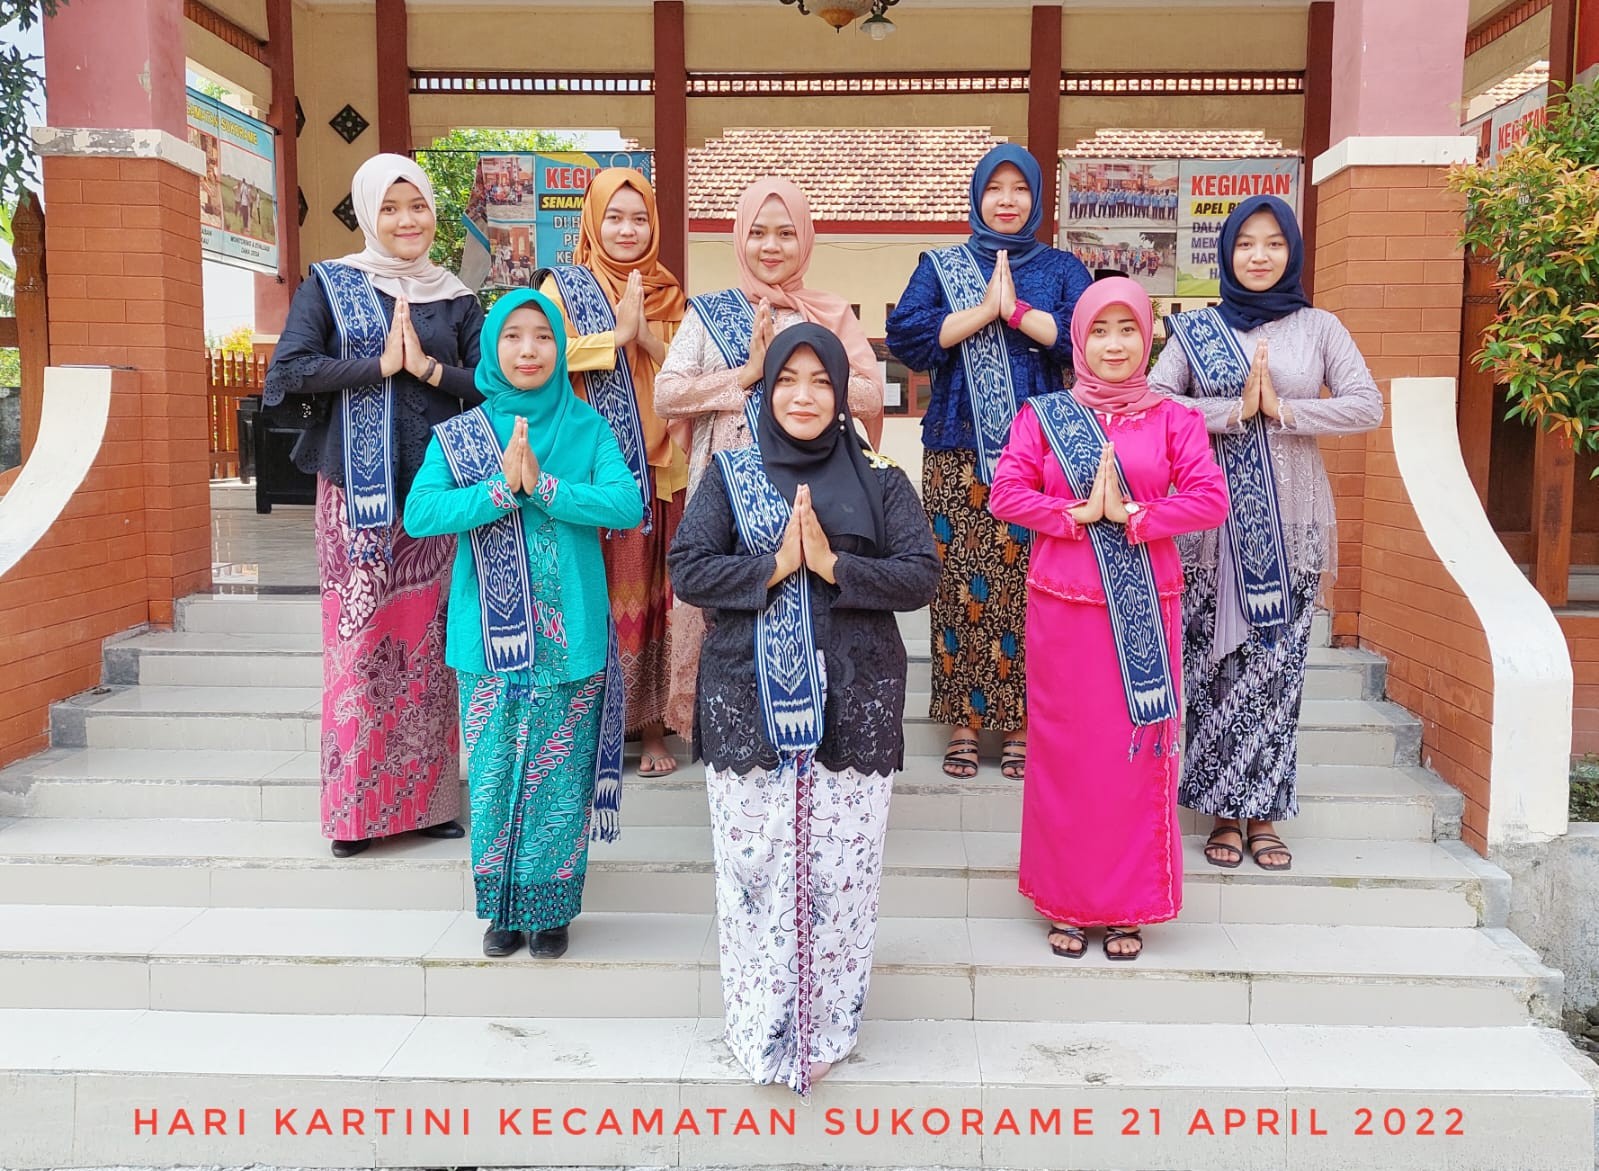 Kartini day's